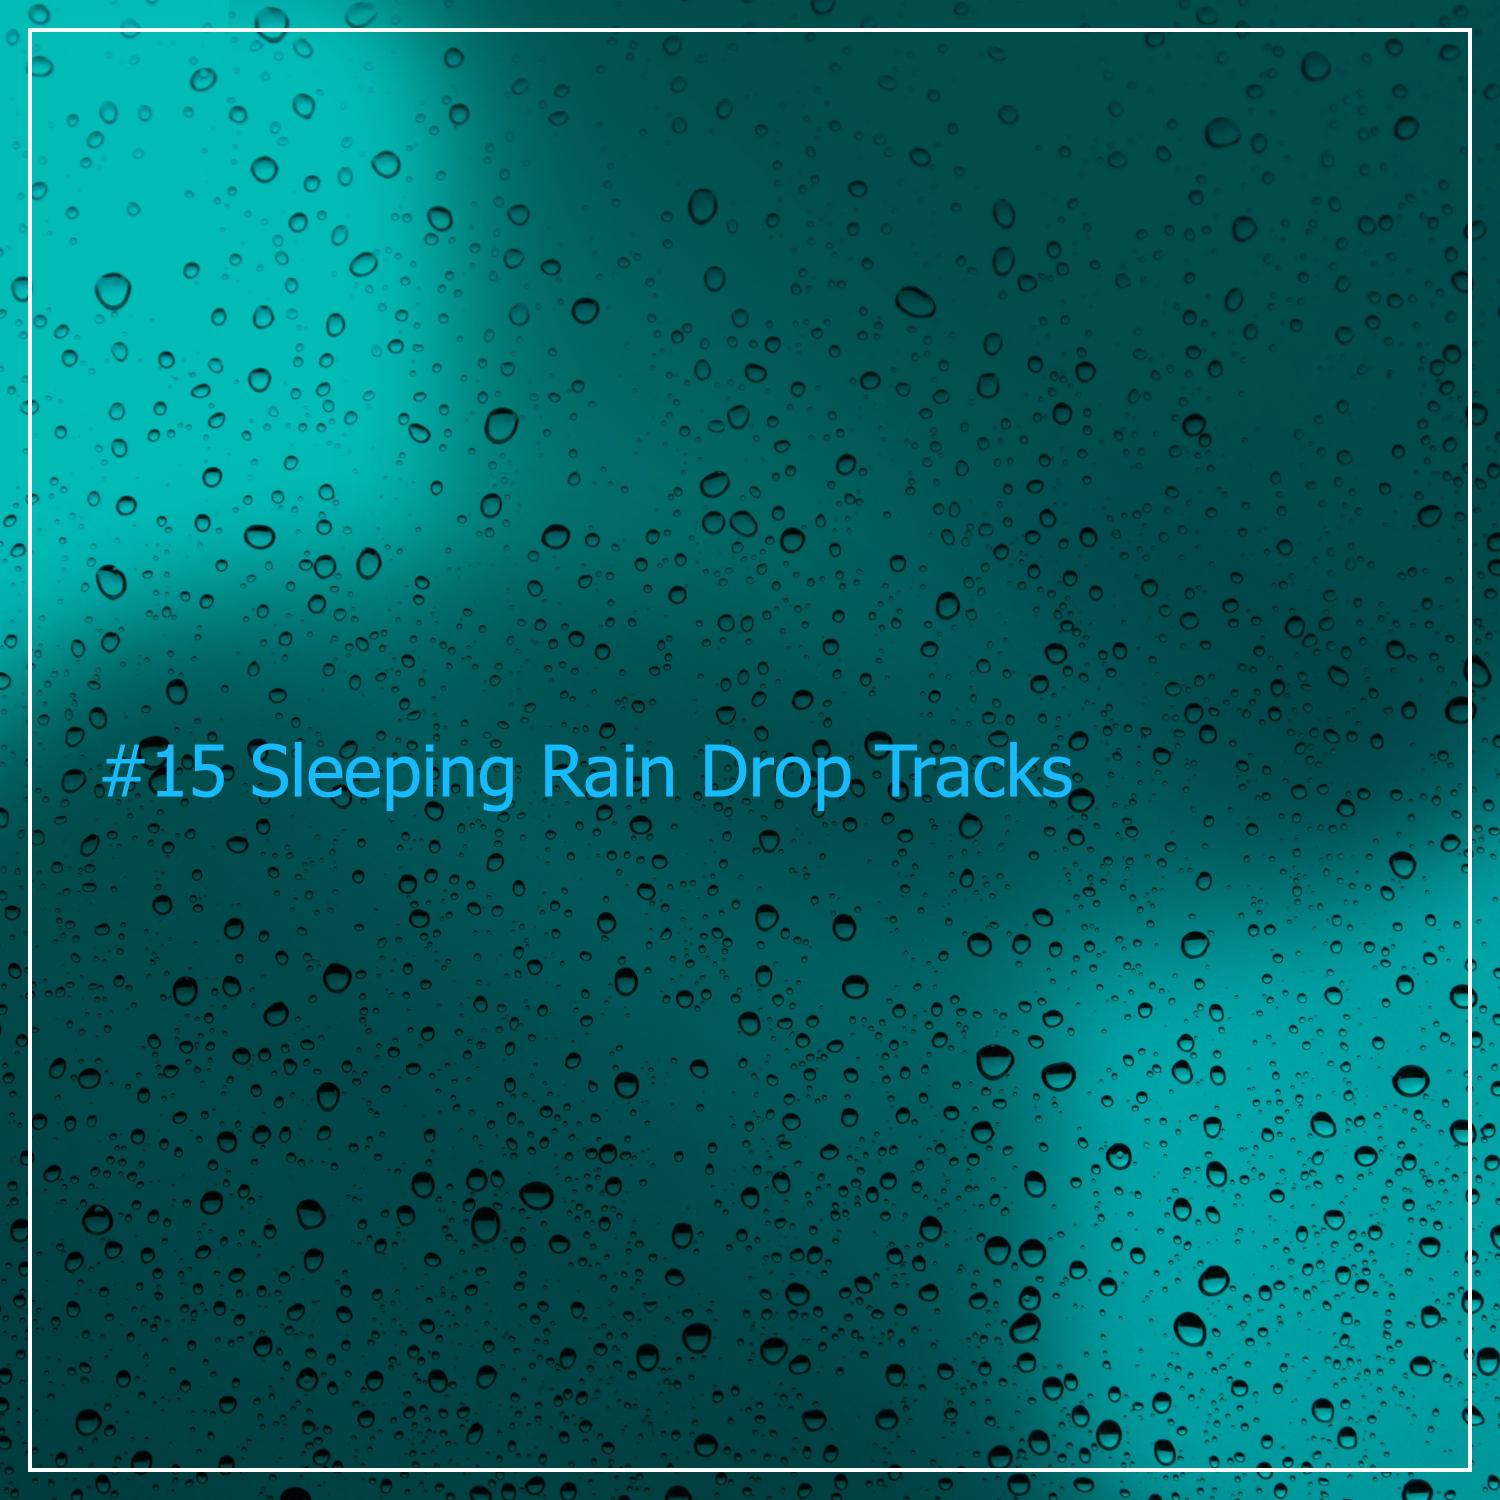 #15 Sleeping Rain Drop Tracks for Spa & Sleep Relaxation